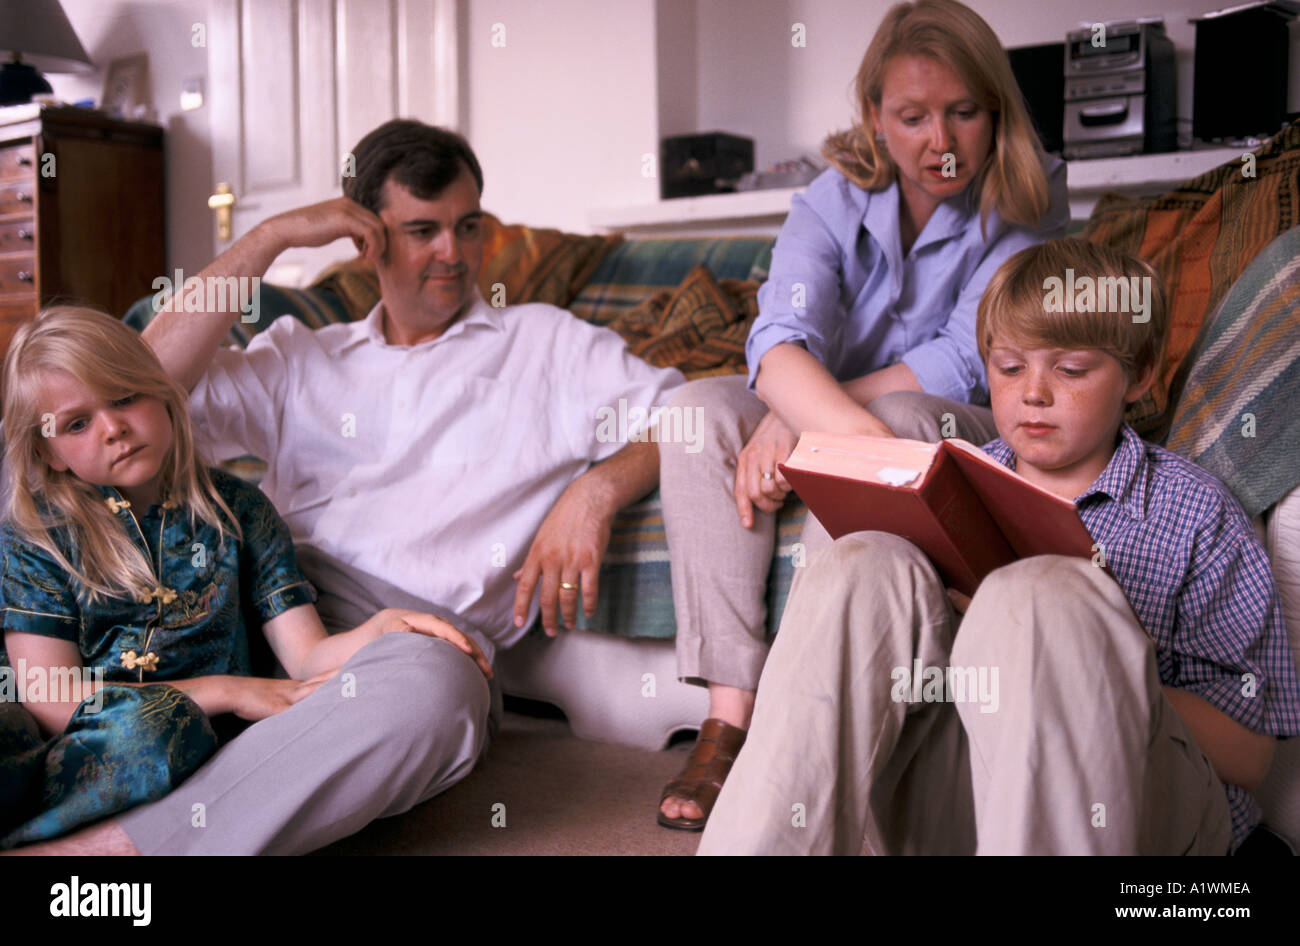 FAMILY AT HOME READING CHRISITIAN PRAYERS Stock Photo